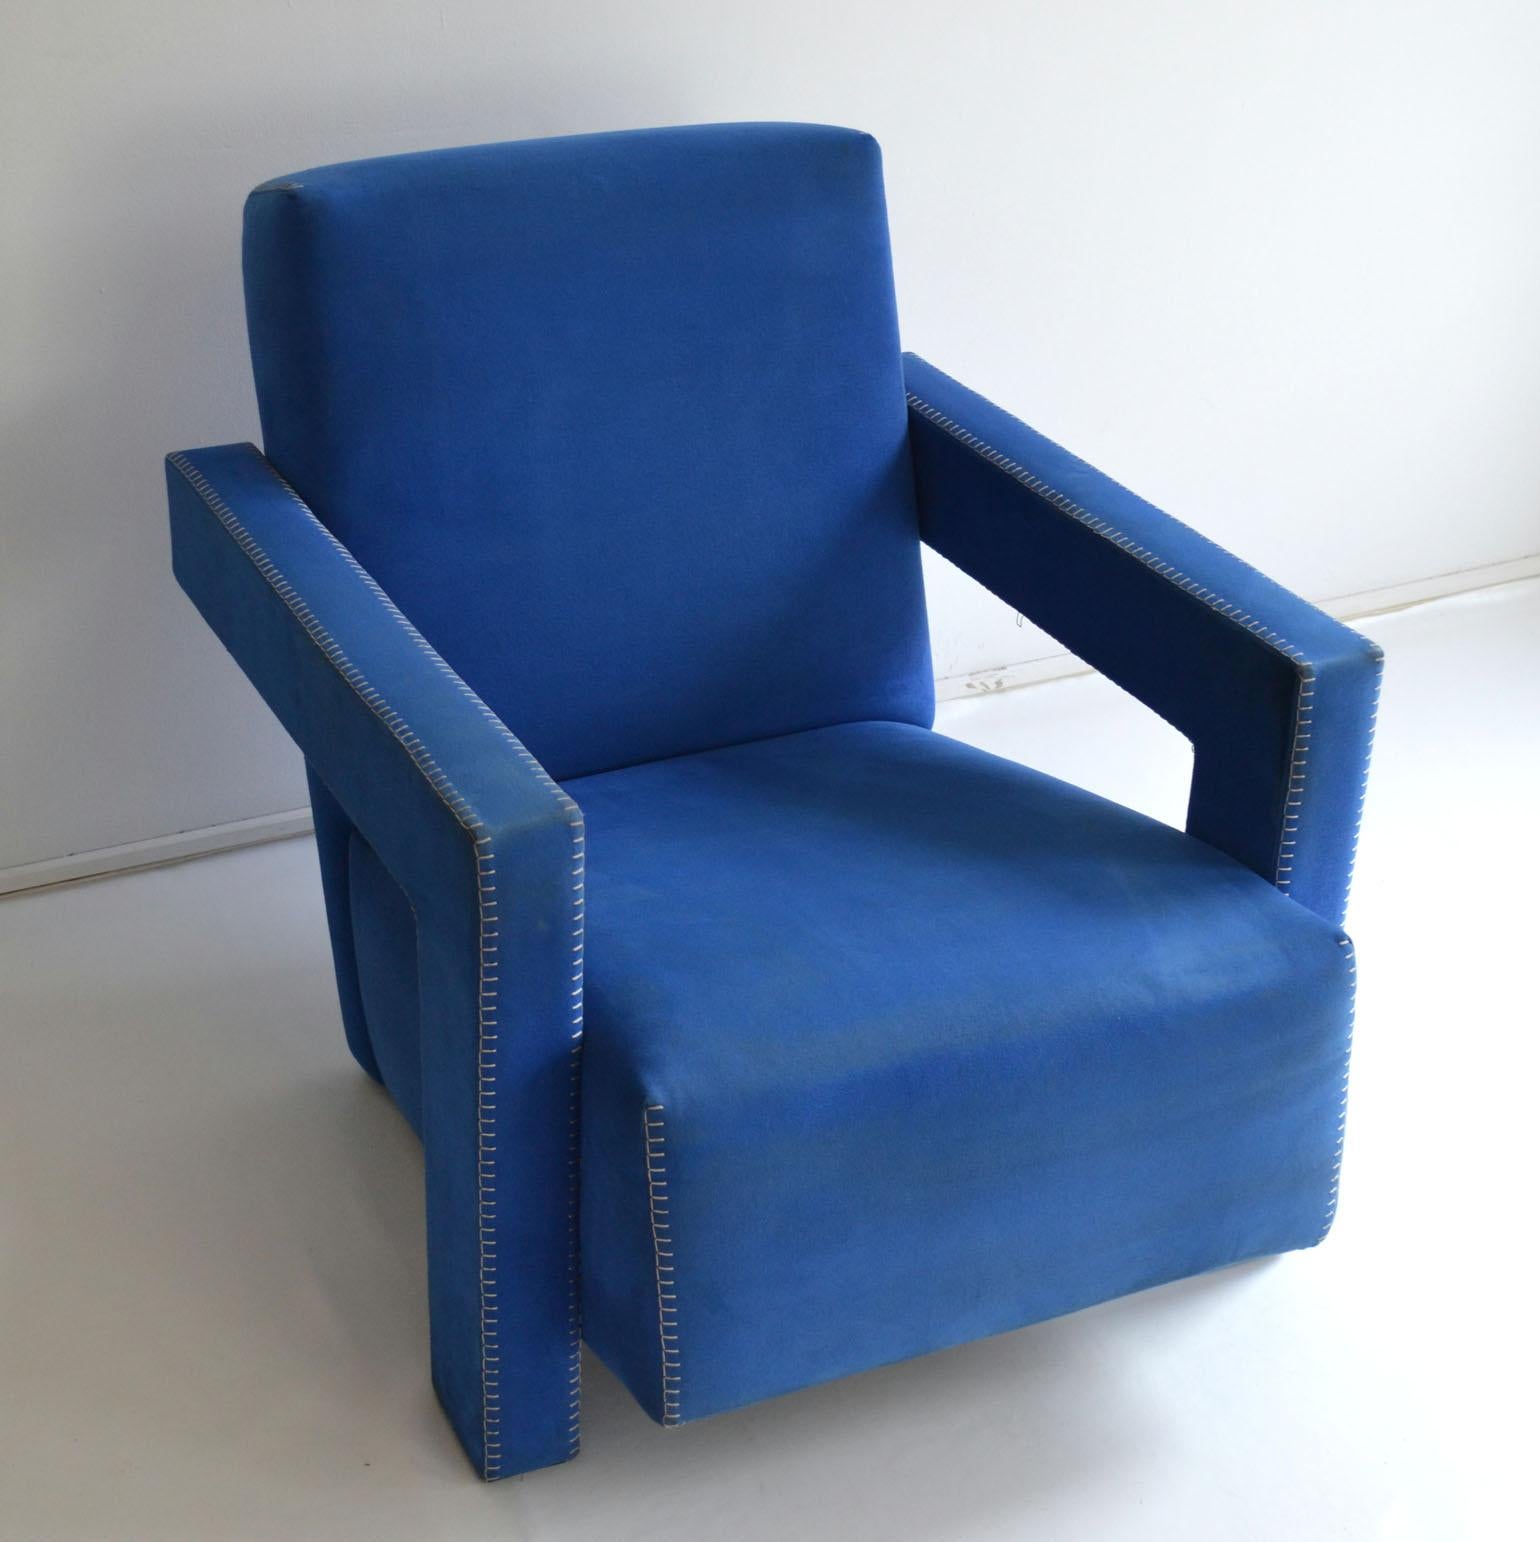 Blue 'Utrecht' Chair by Dutch Gerrit Rietveld for Cassina 1980s Italy 1